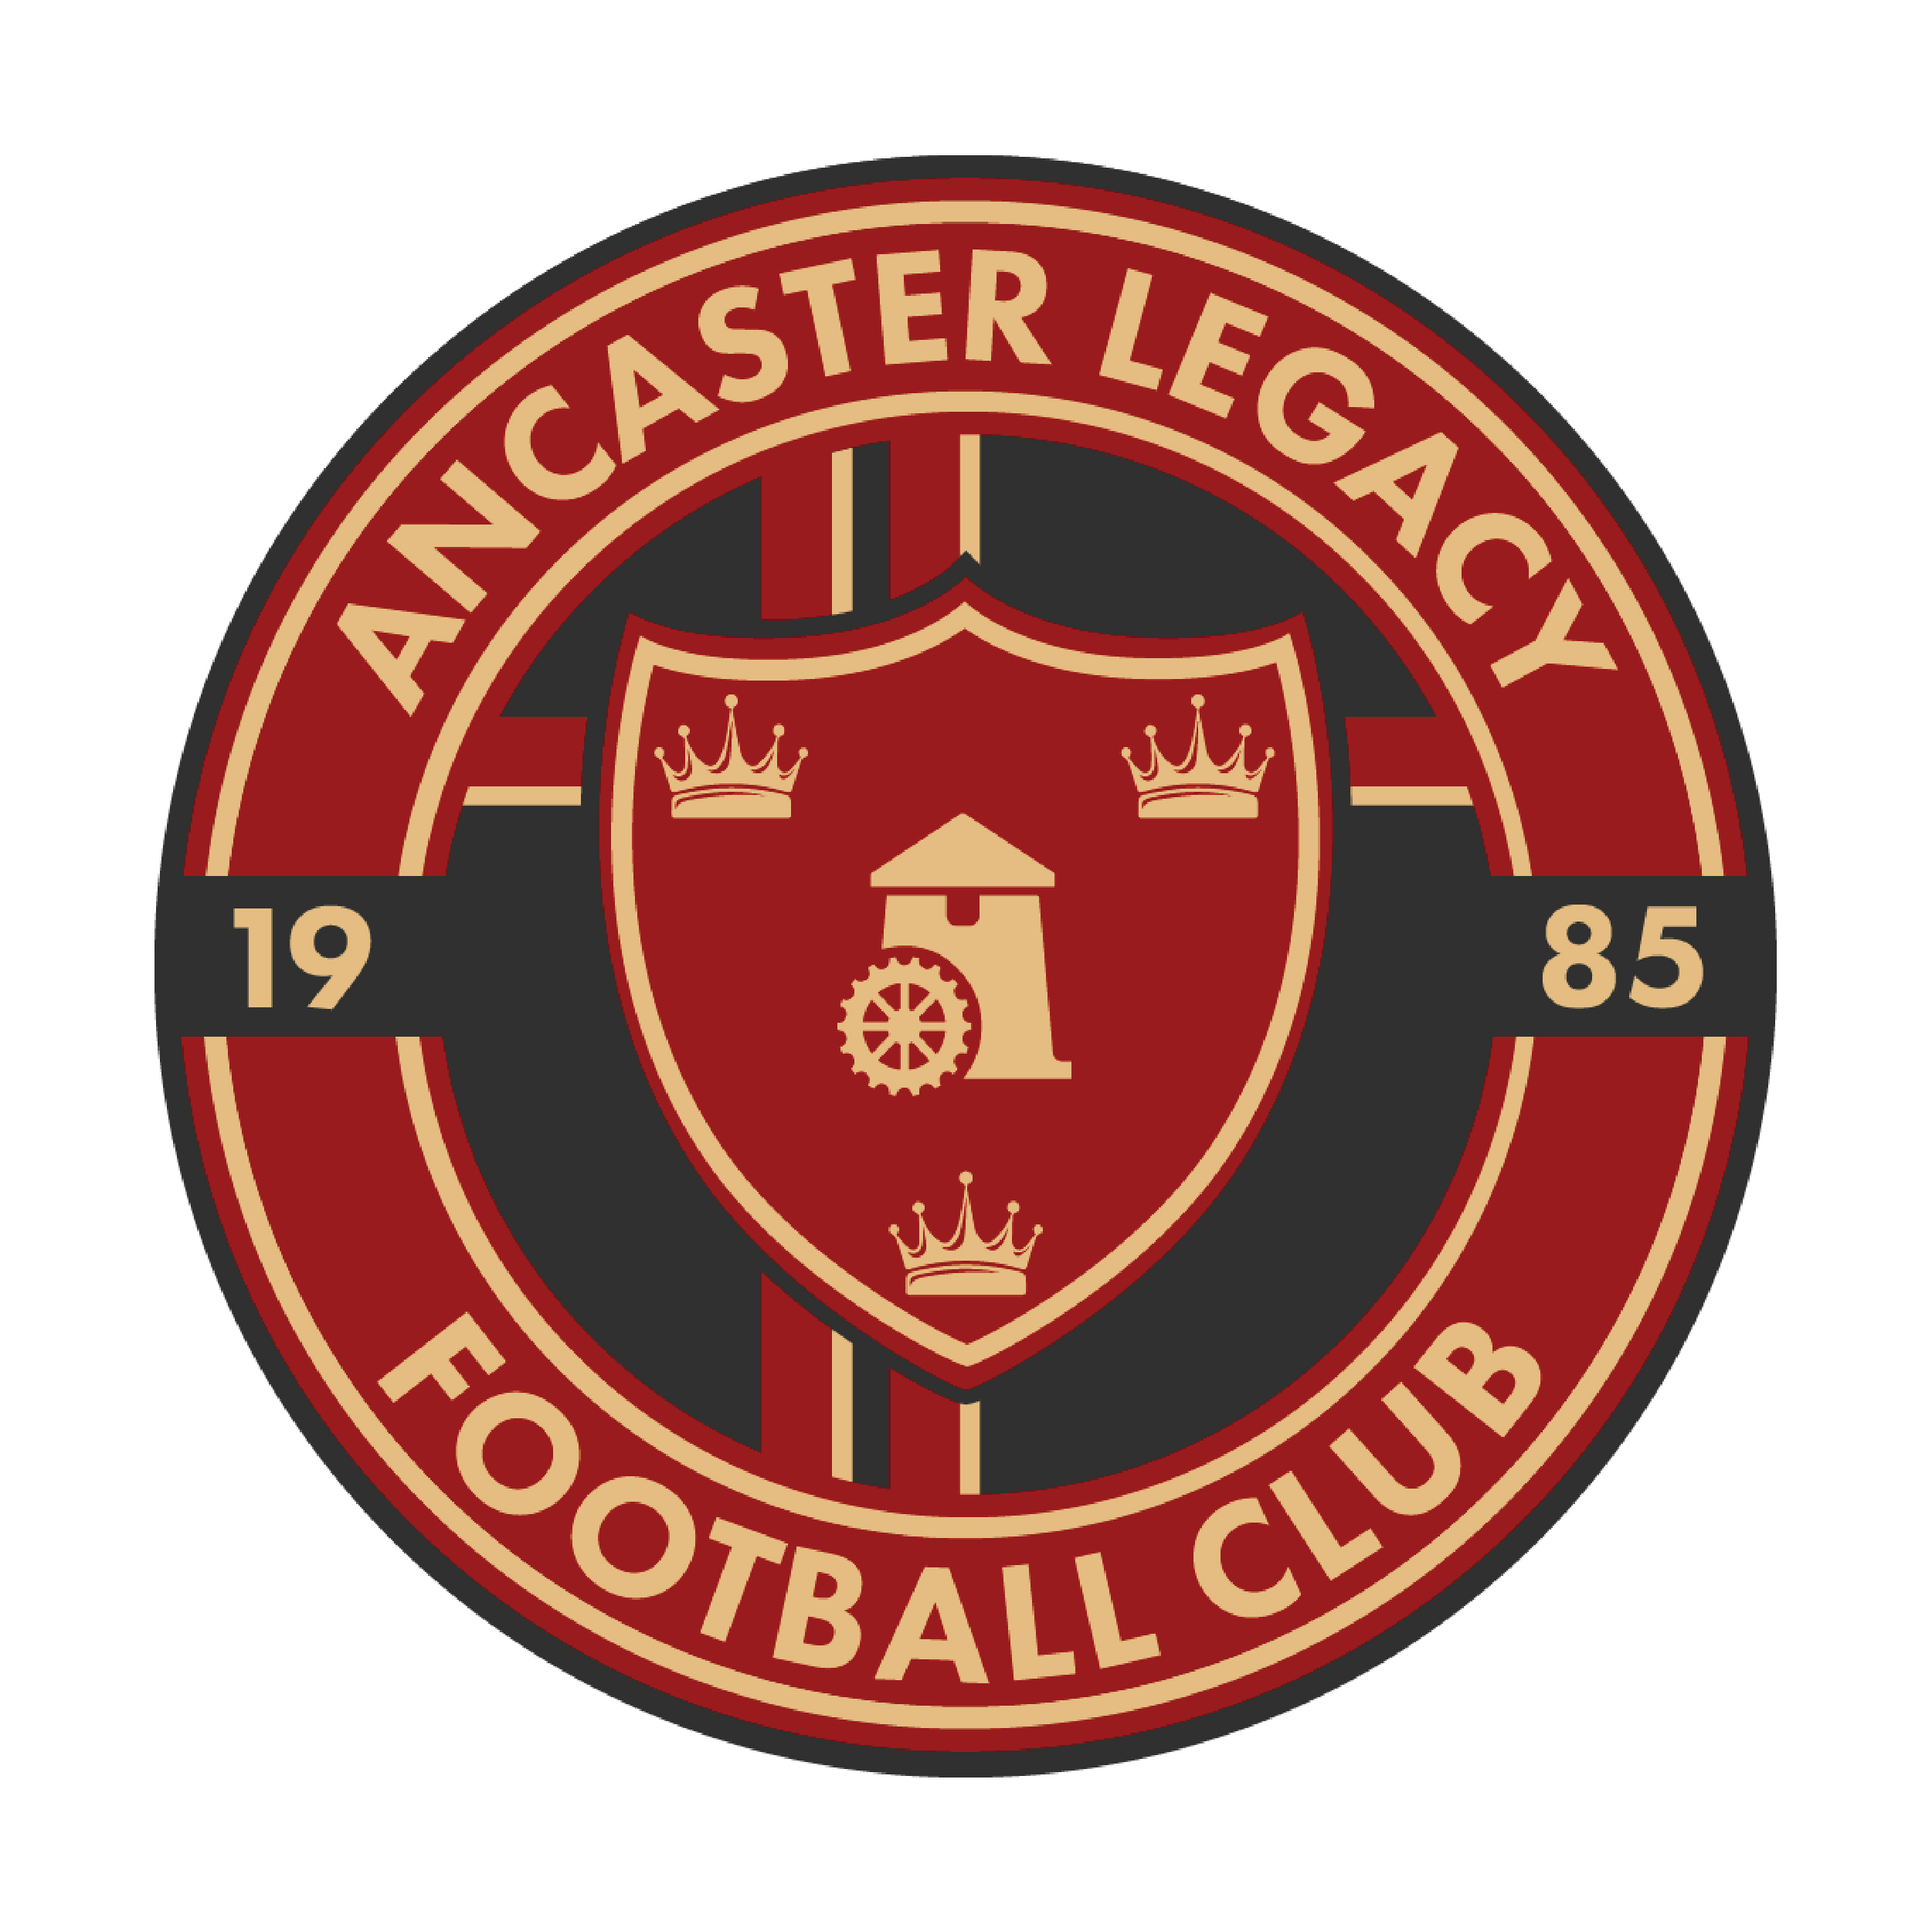 Ancaster Soccer Club